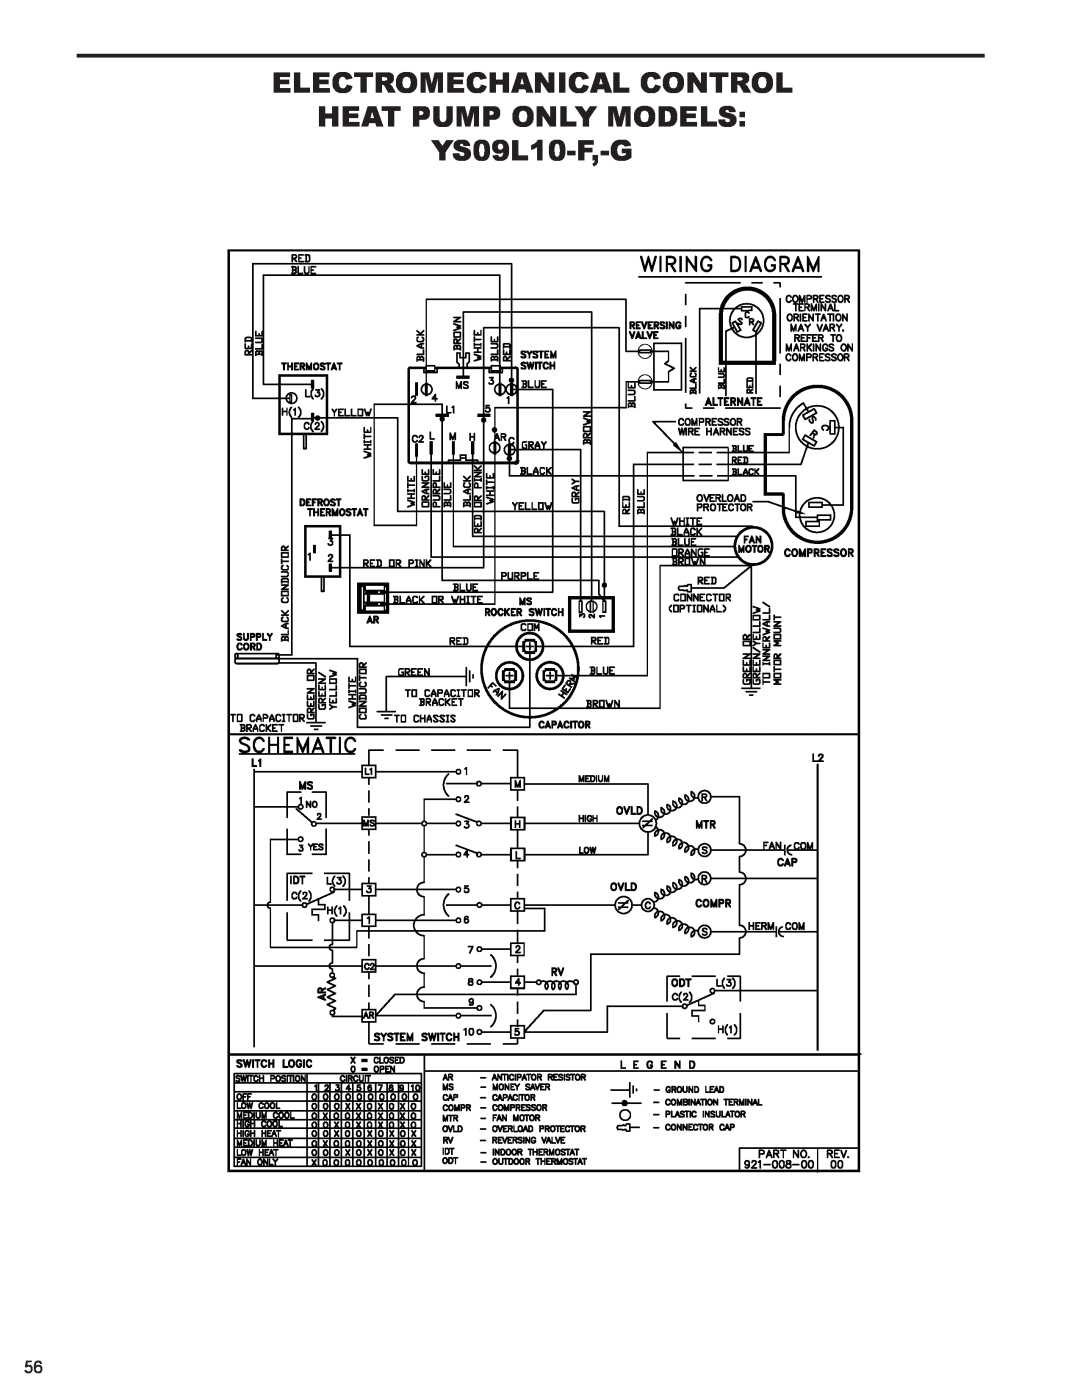 Friedrich 2008, 2009 service manual Electromechanical Control Heat Pump Only Models, YS09L10-F,-G 